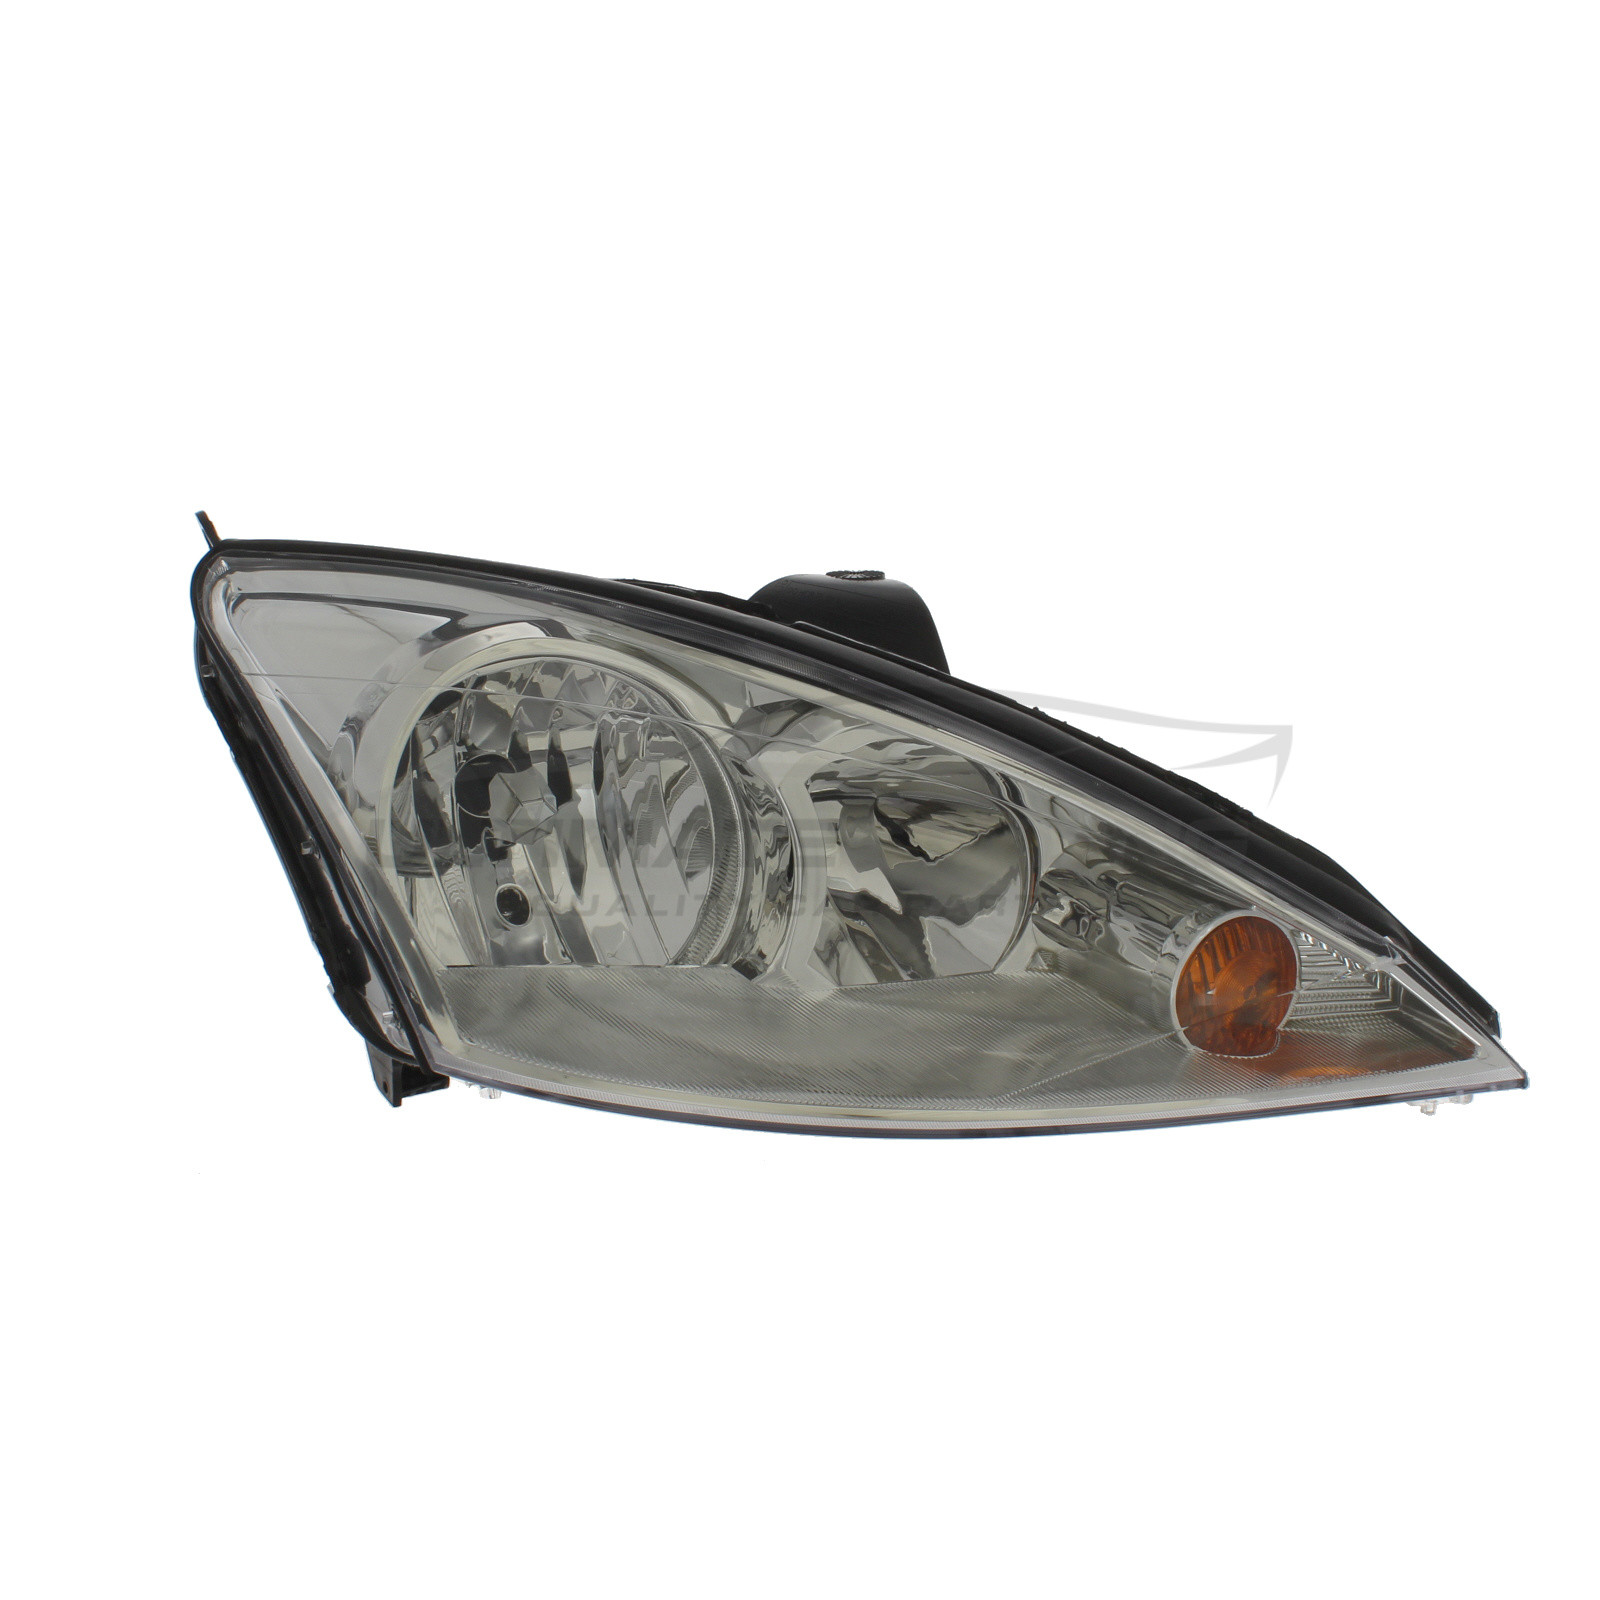 Headlight / Headlamp for Ford Focus